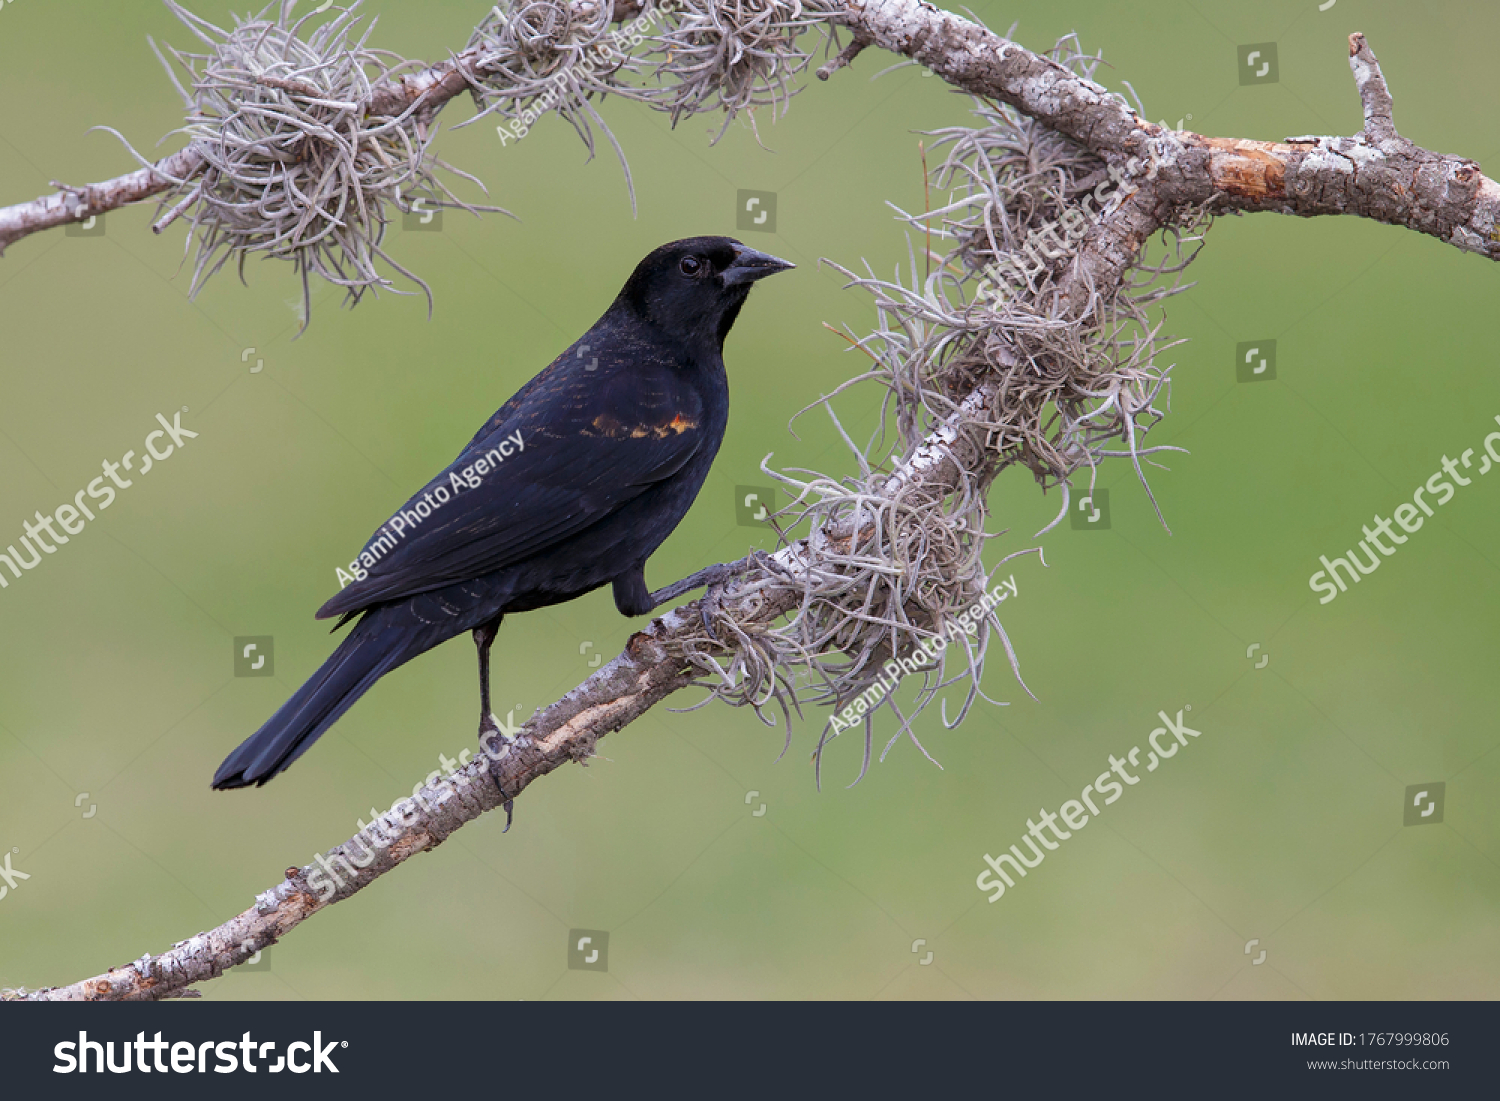 Subadult or adult male Red-winged Blackbird (Agelaius phoeniceus) in non-breeding plumage Hidalgo County, Texas, United States. #1767999806